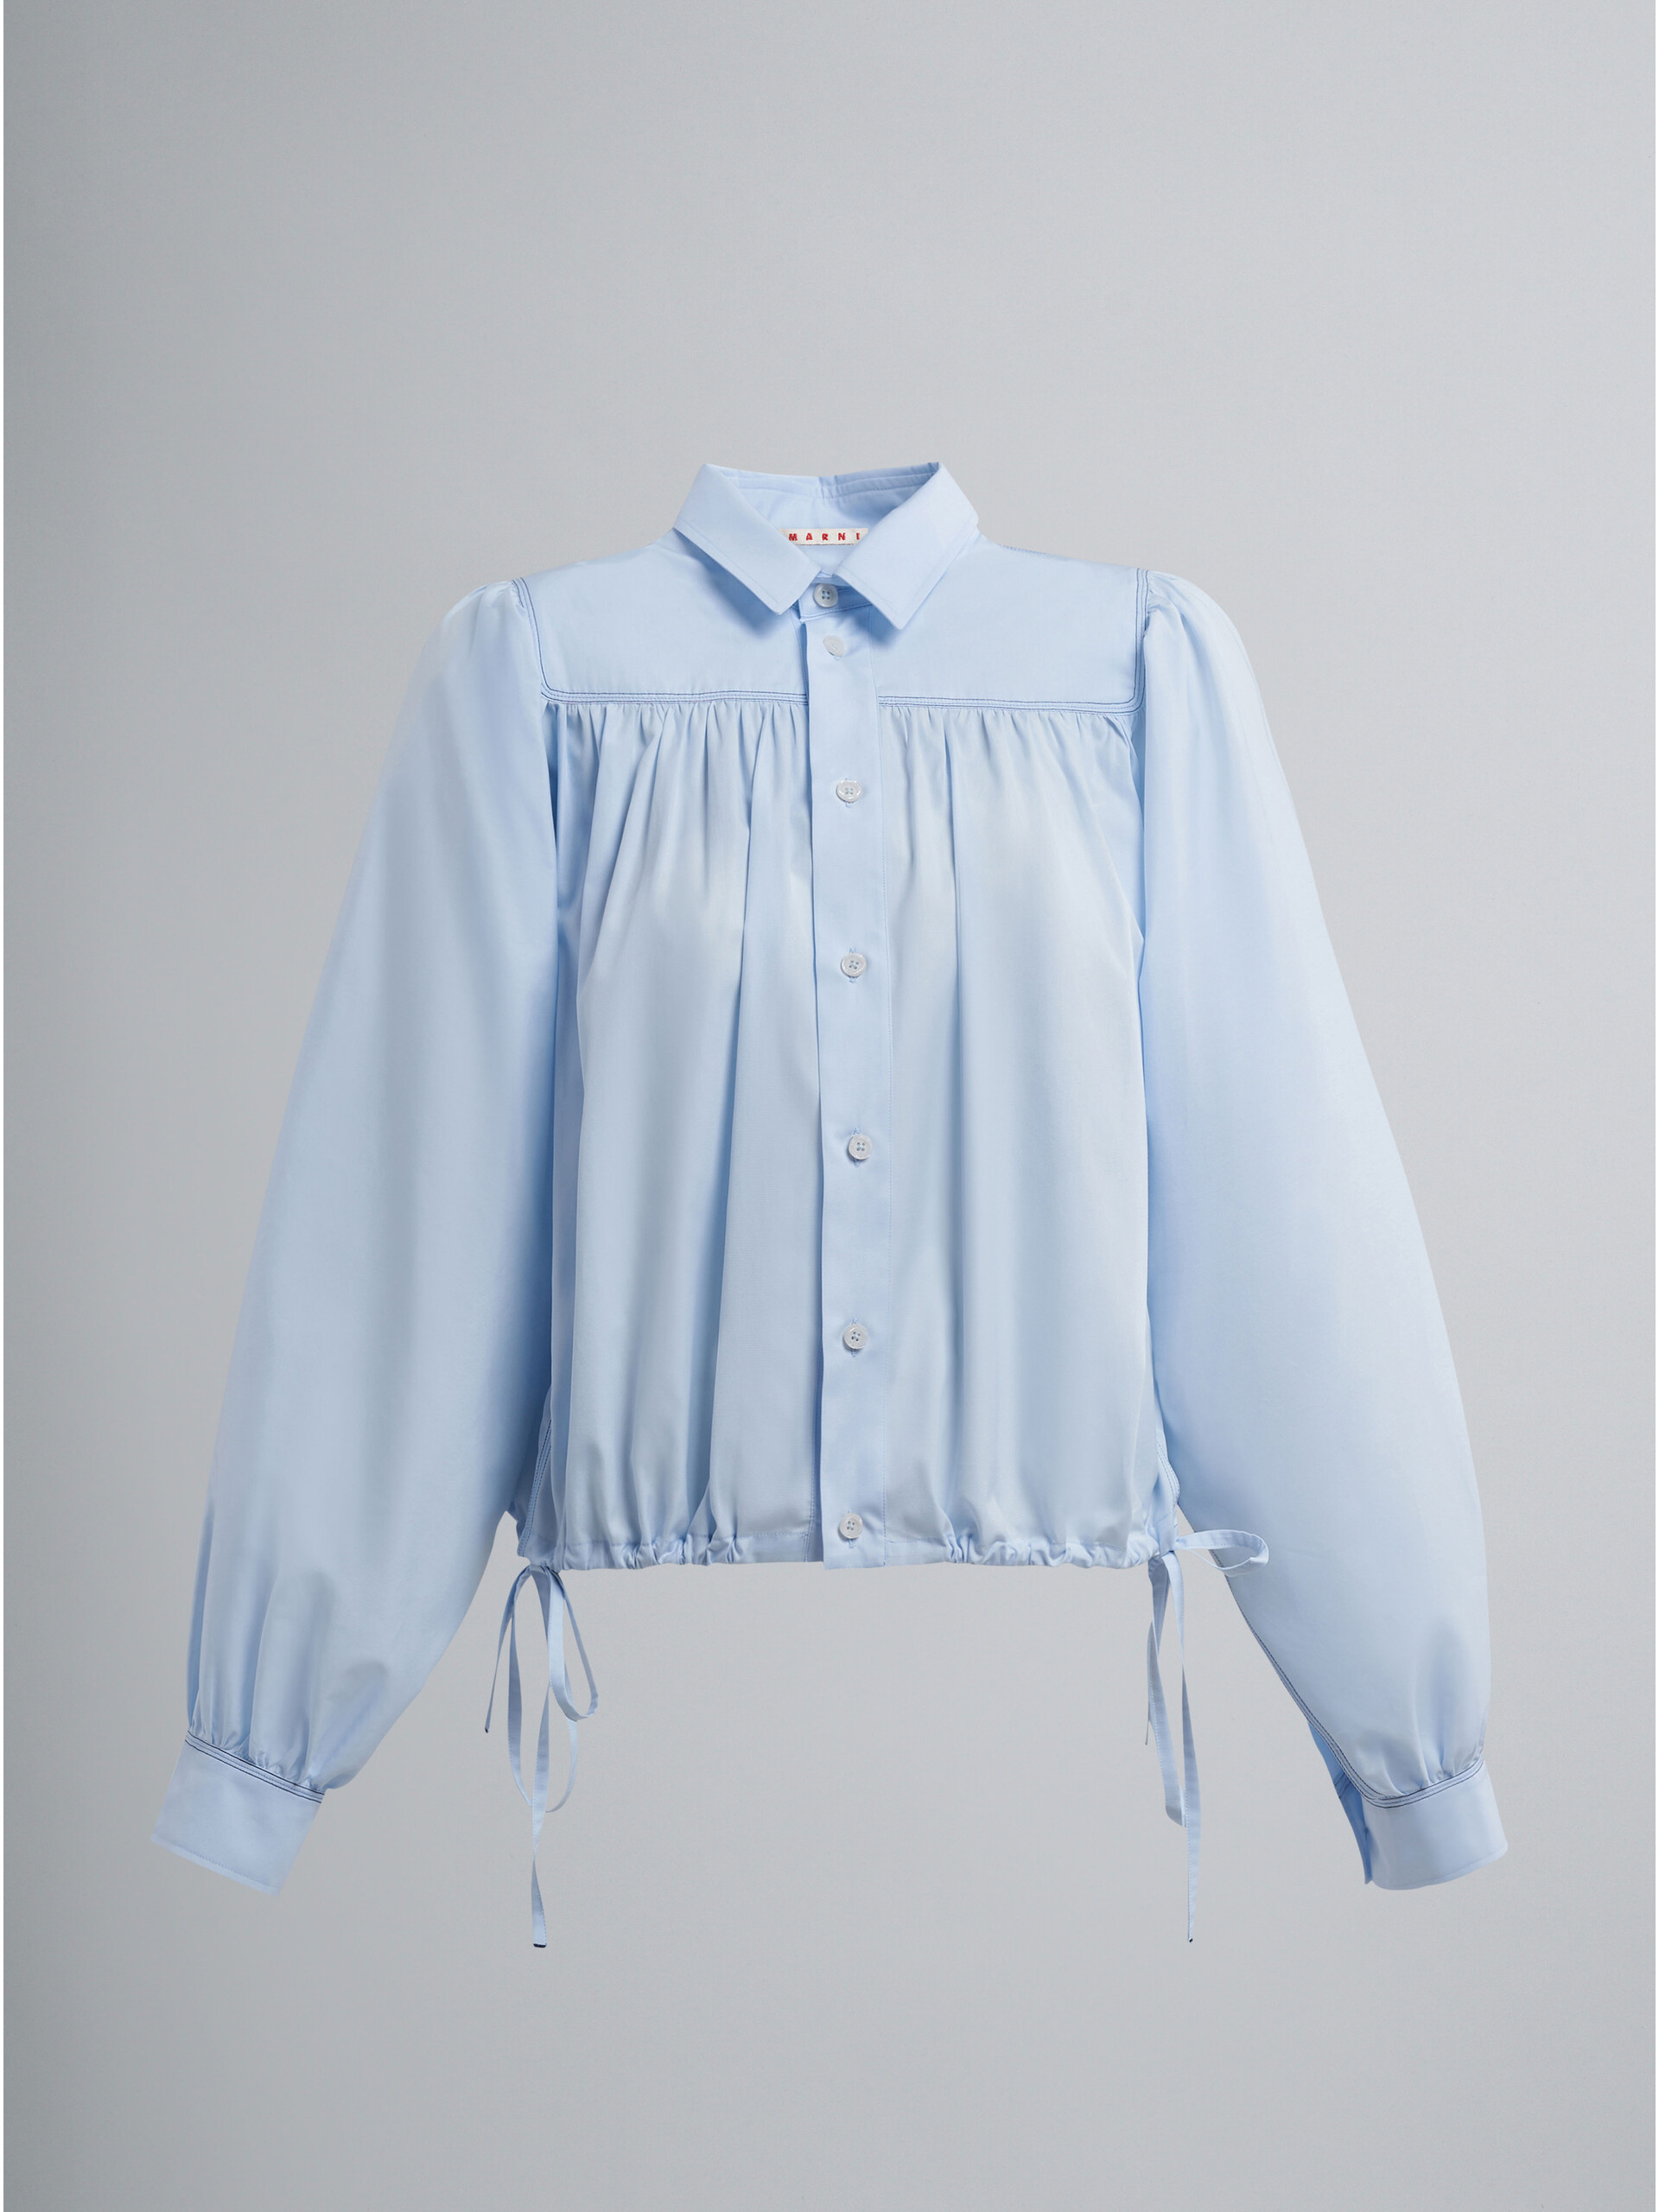 Cotton poplin shirt - Shirts - Image 1